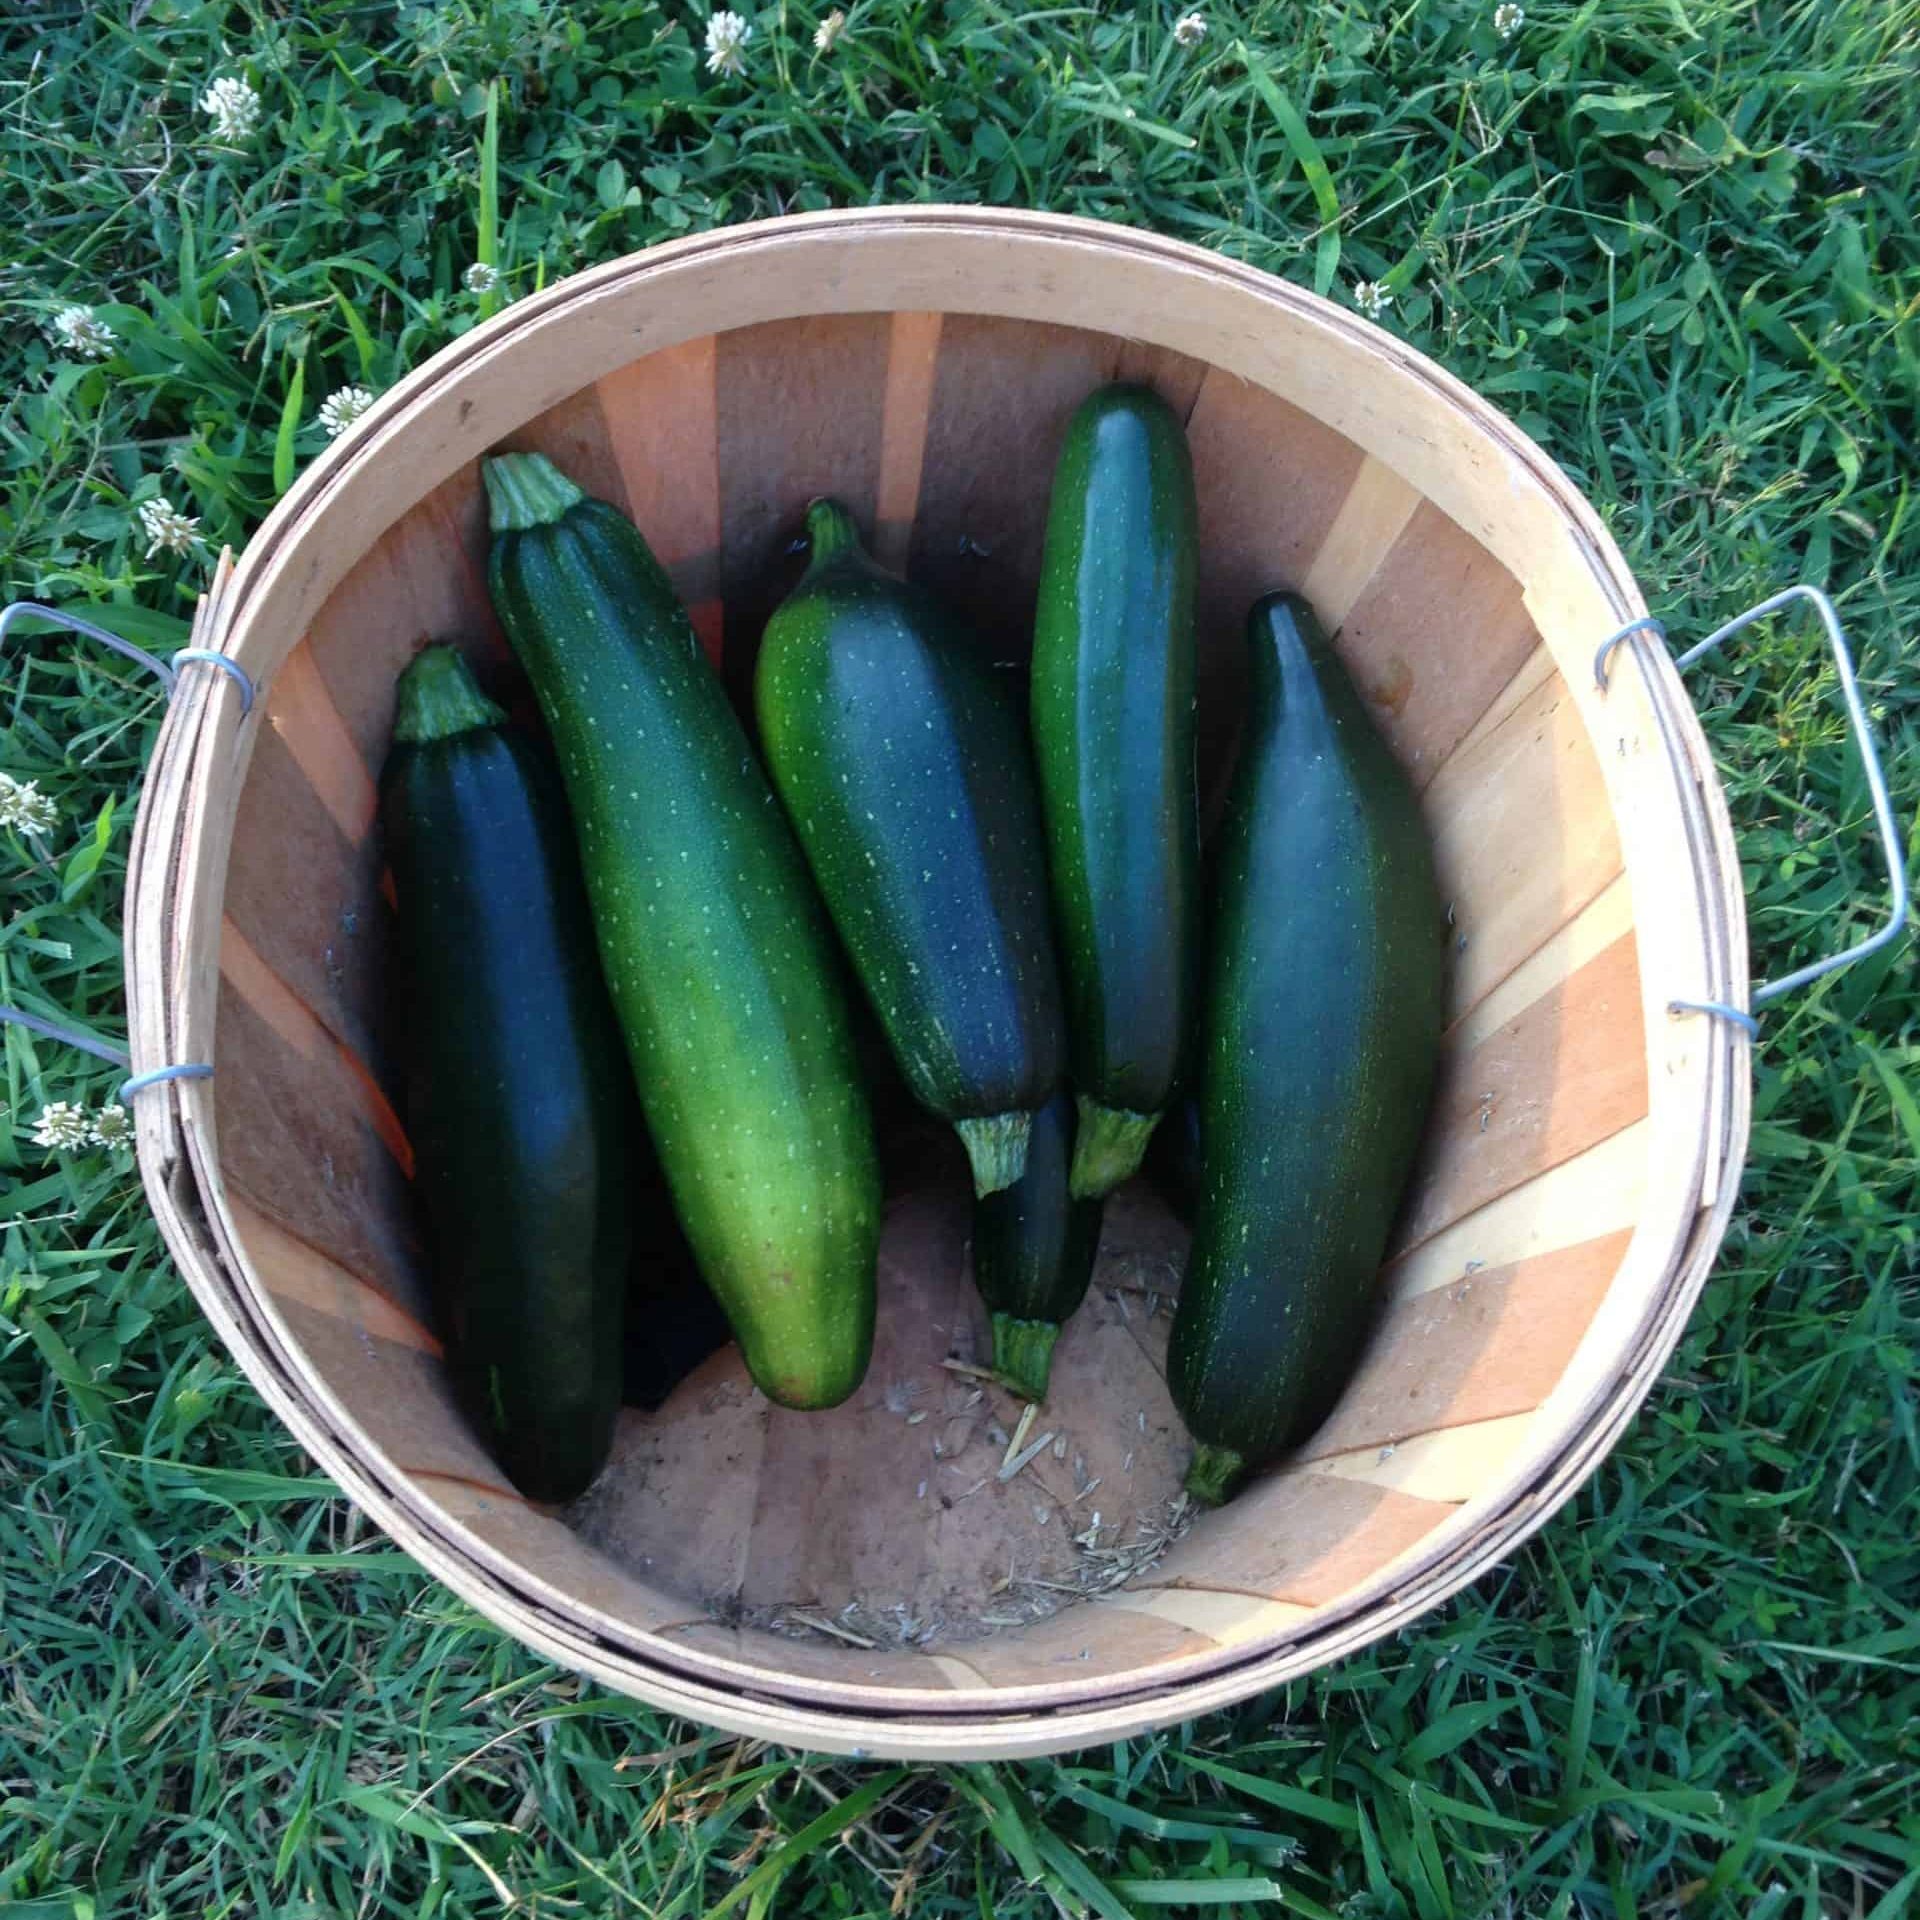 zucchini in wooden basket sitting in the grass